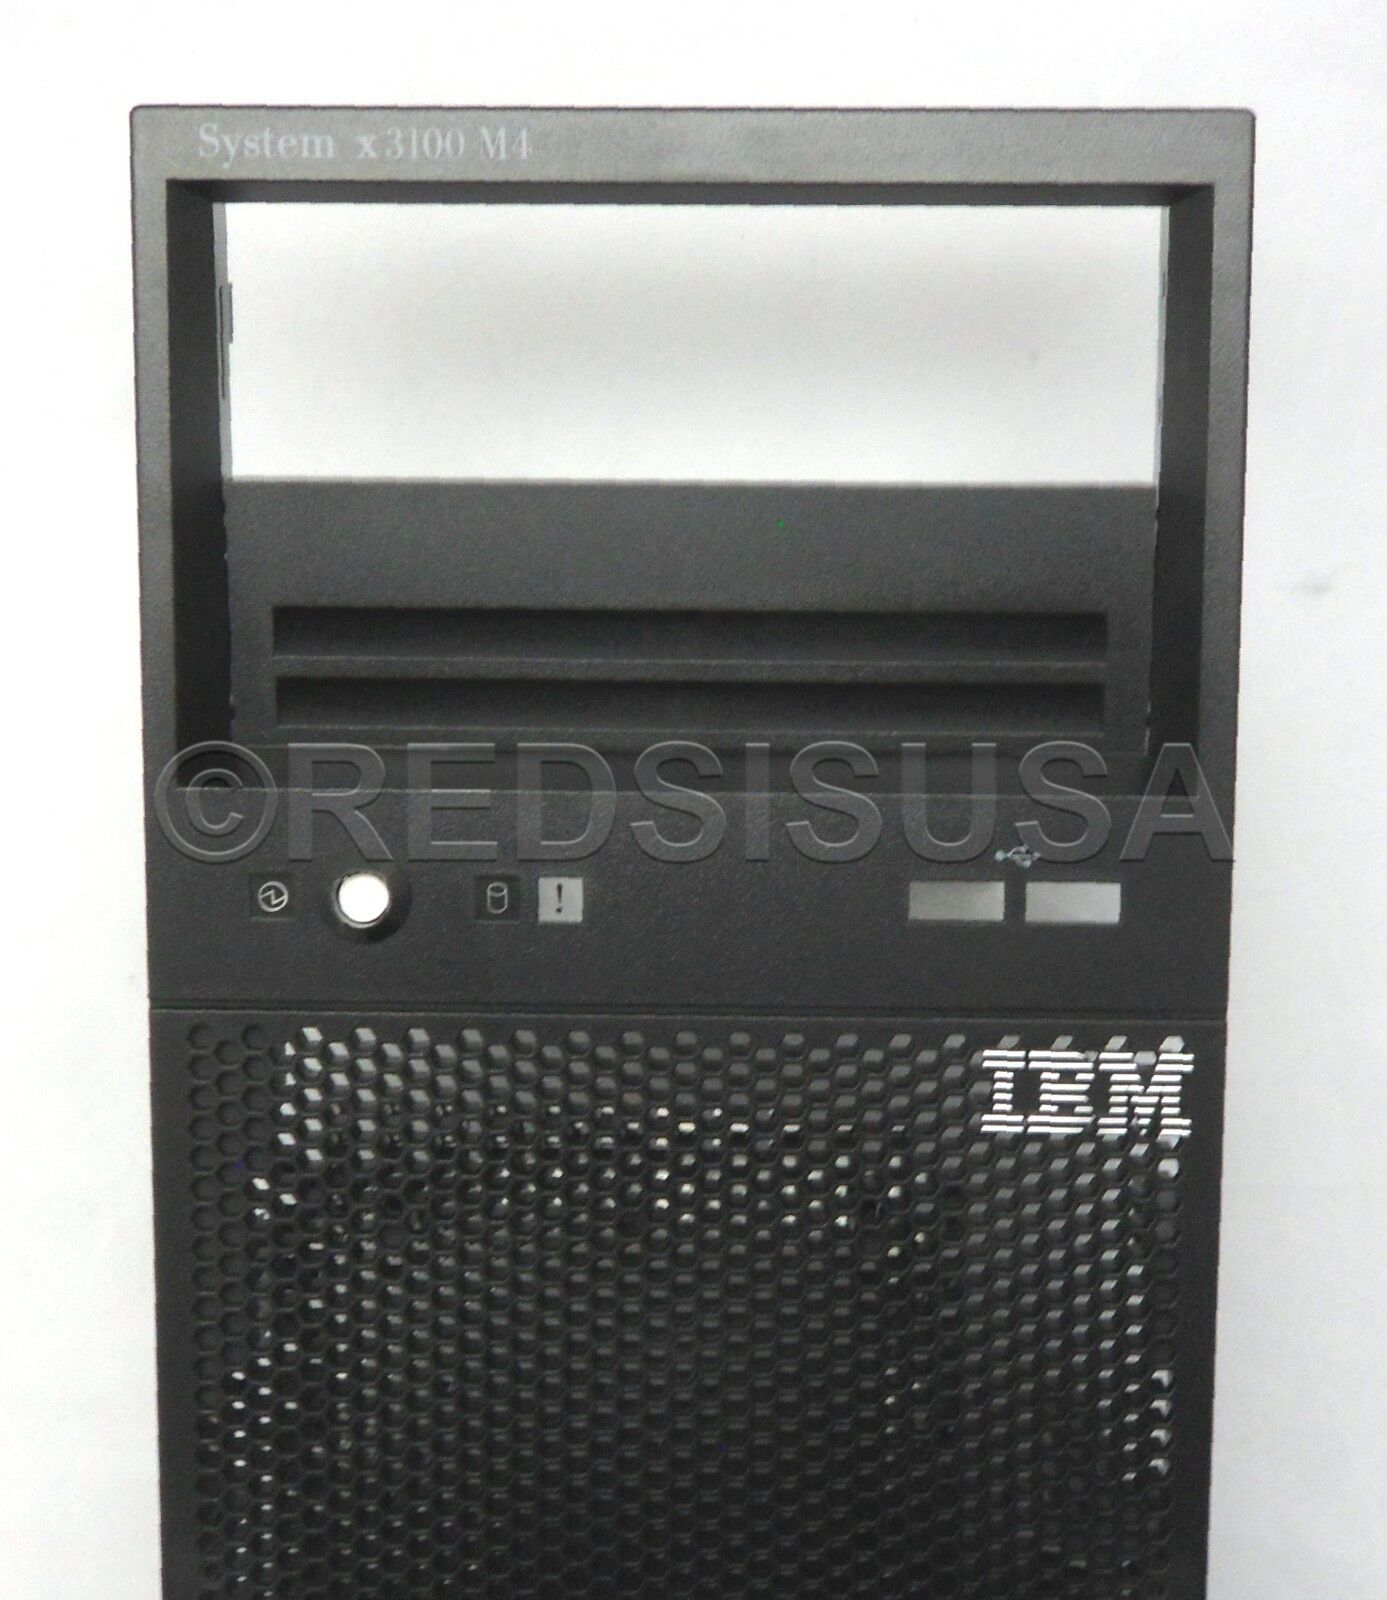 Genuine top front bezel for IBM SYSTEM x3100 M4 81Y7478